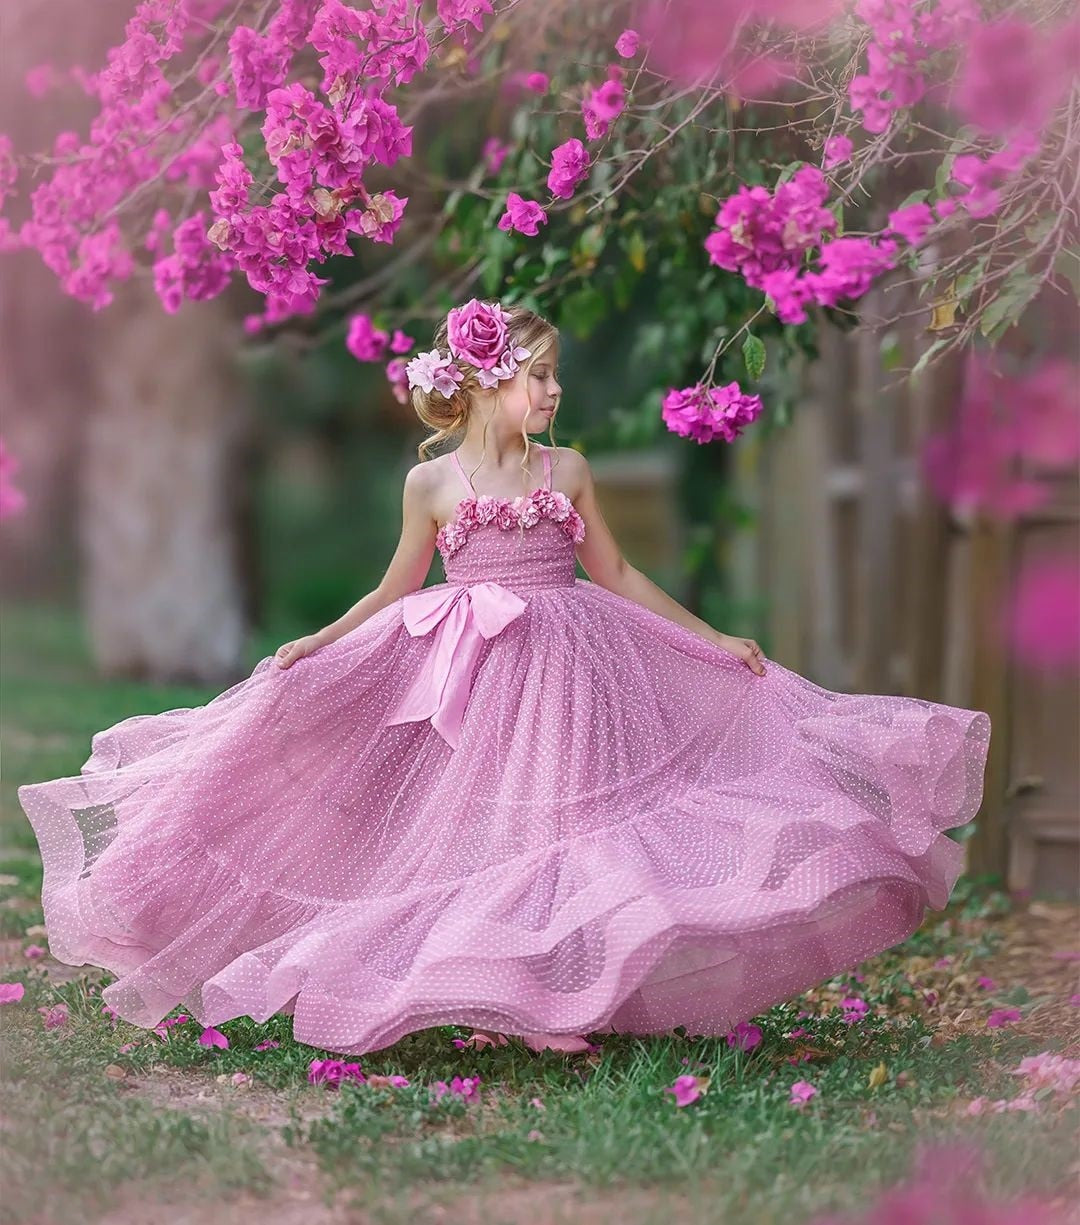 Dress for Girls - Vestido para Ninas Floral Sleeveless Spagehetti Straps Princess Ball Gown Floor Length Fluffy Skirt Tulle Fairy Wedding Party